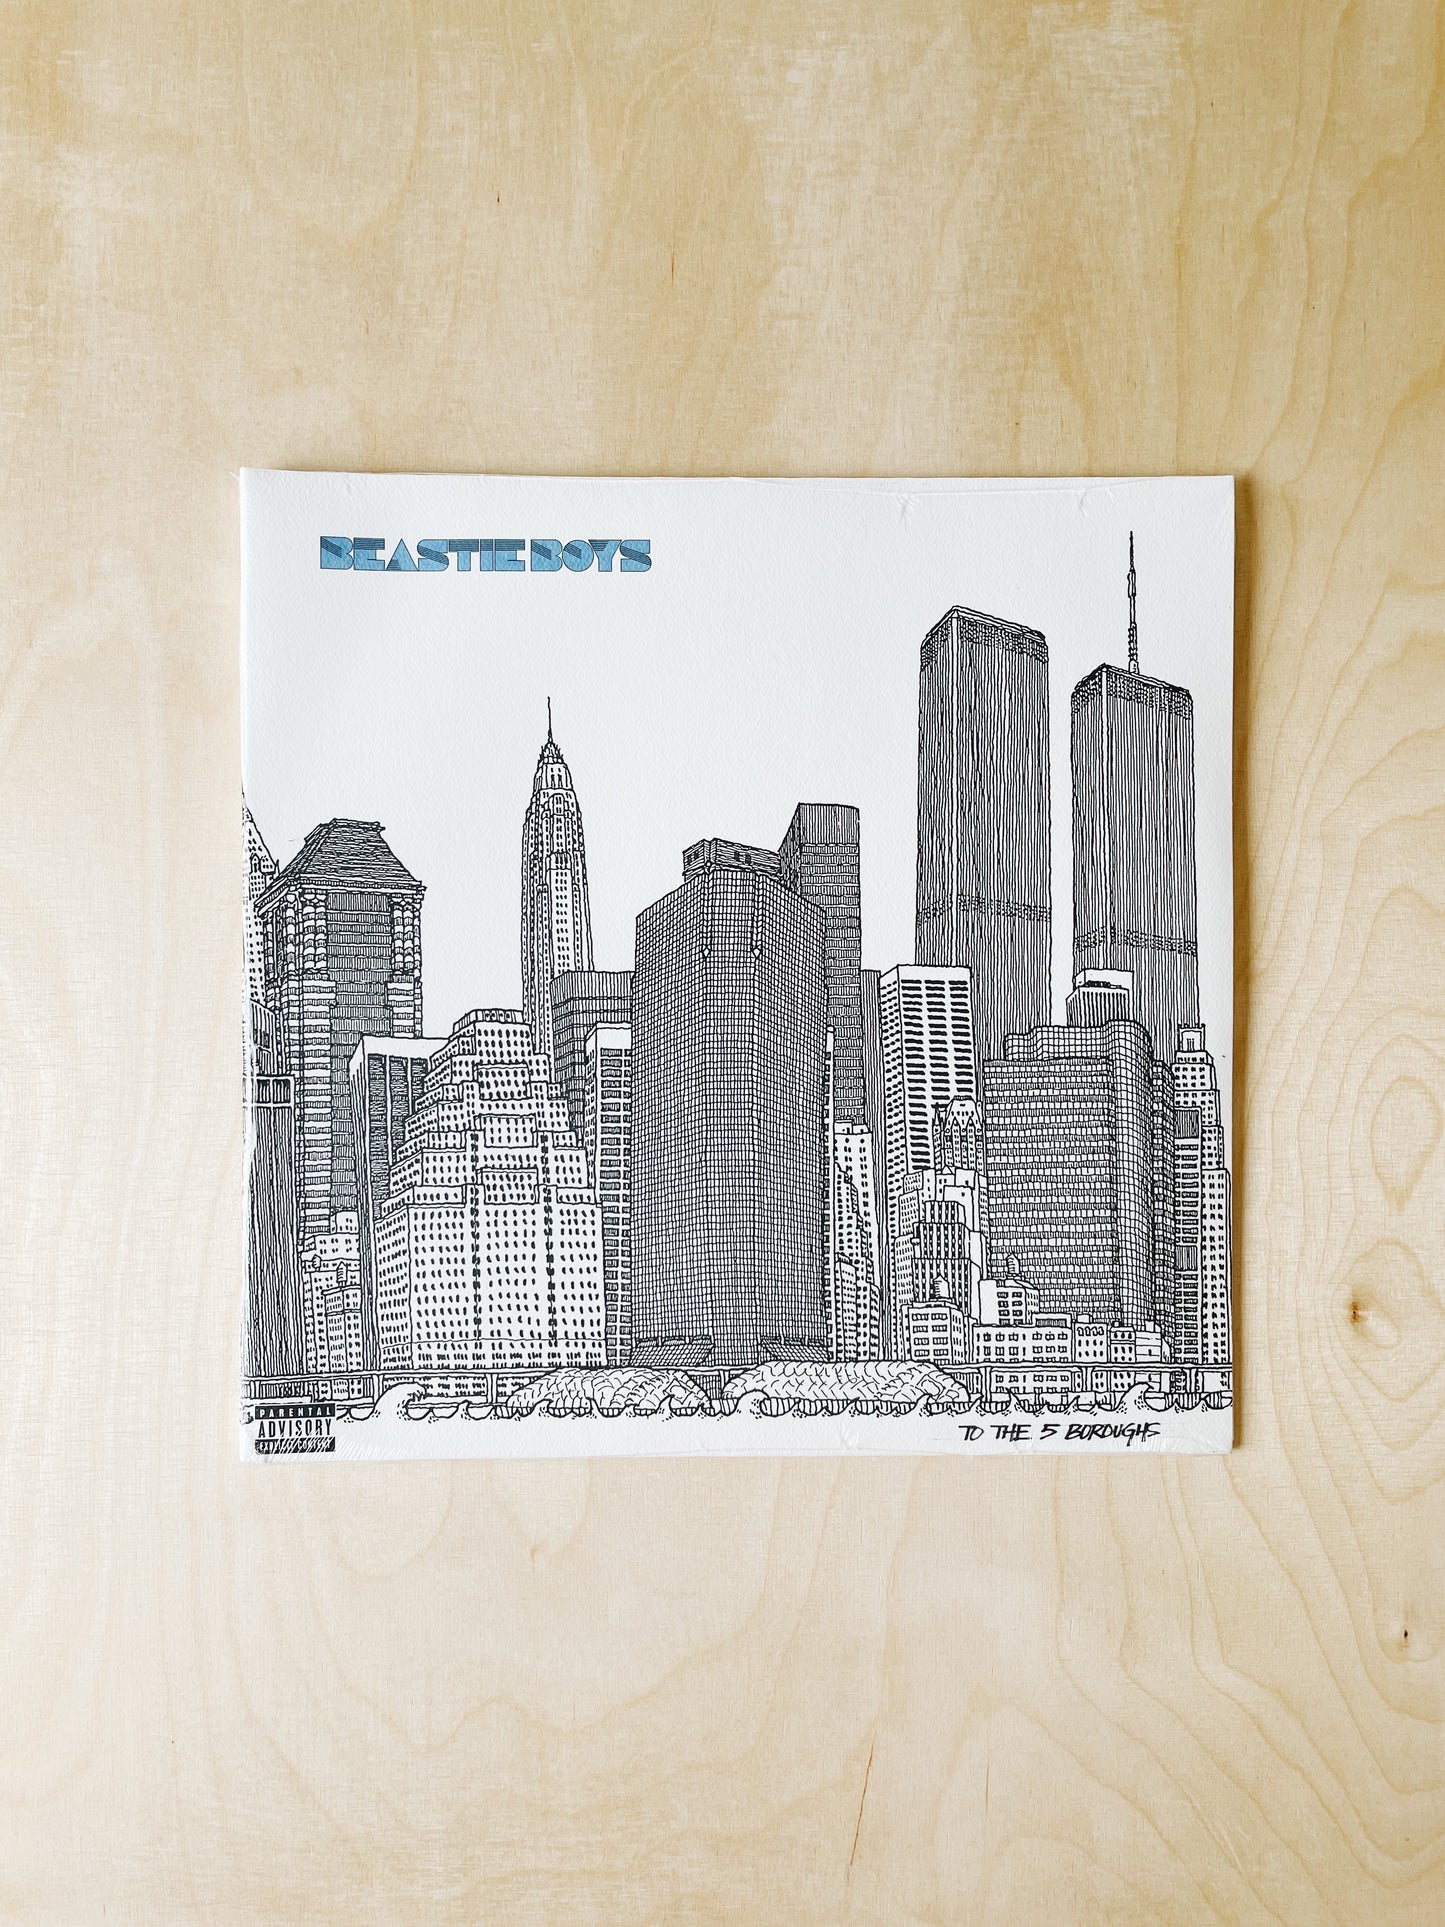 Beastie Boys - To The 5 Boroughs LP